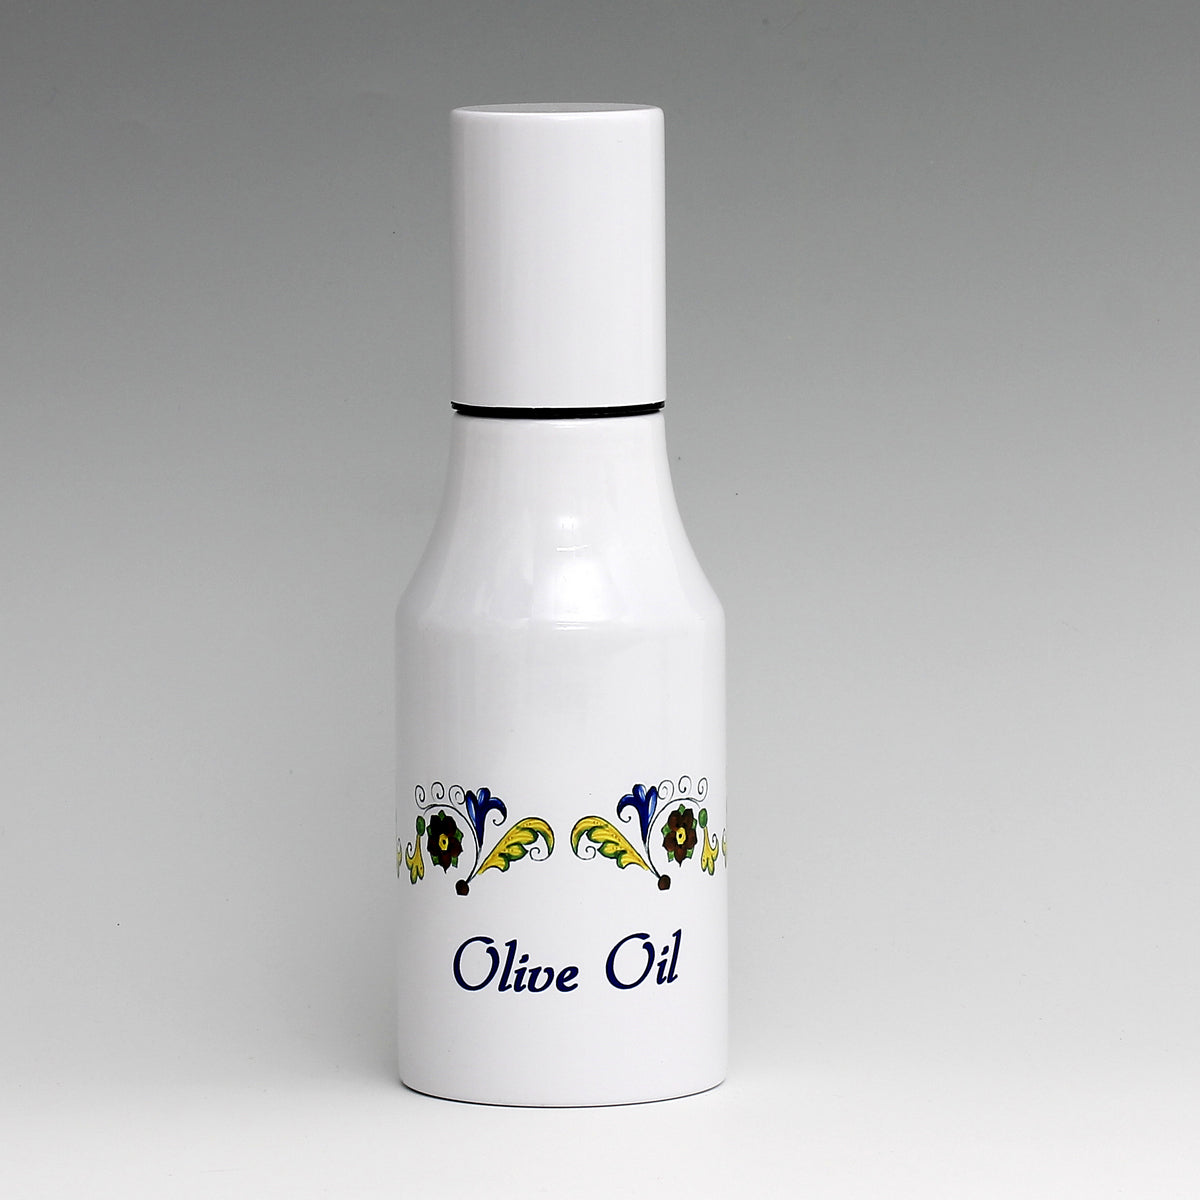 SUBLIMART: Olive Oil Dispenser with non-drip pourer and dust cover cap (Deruta Design 04)